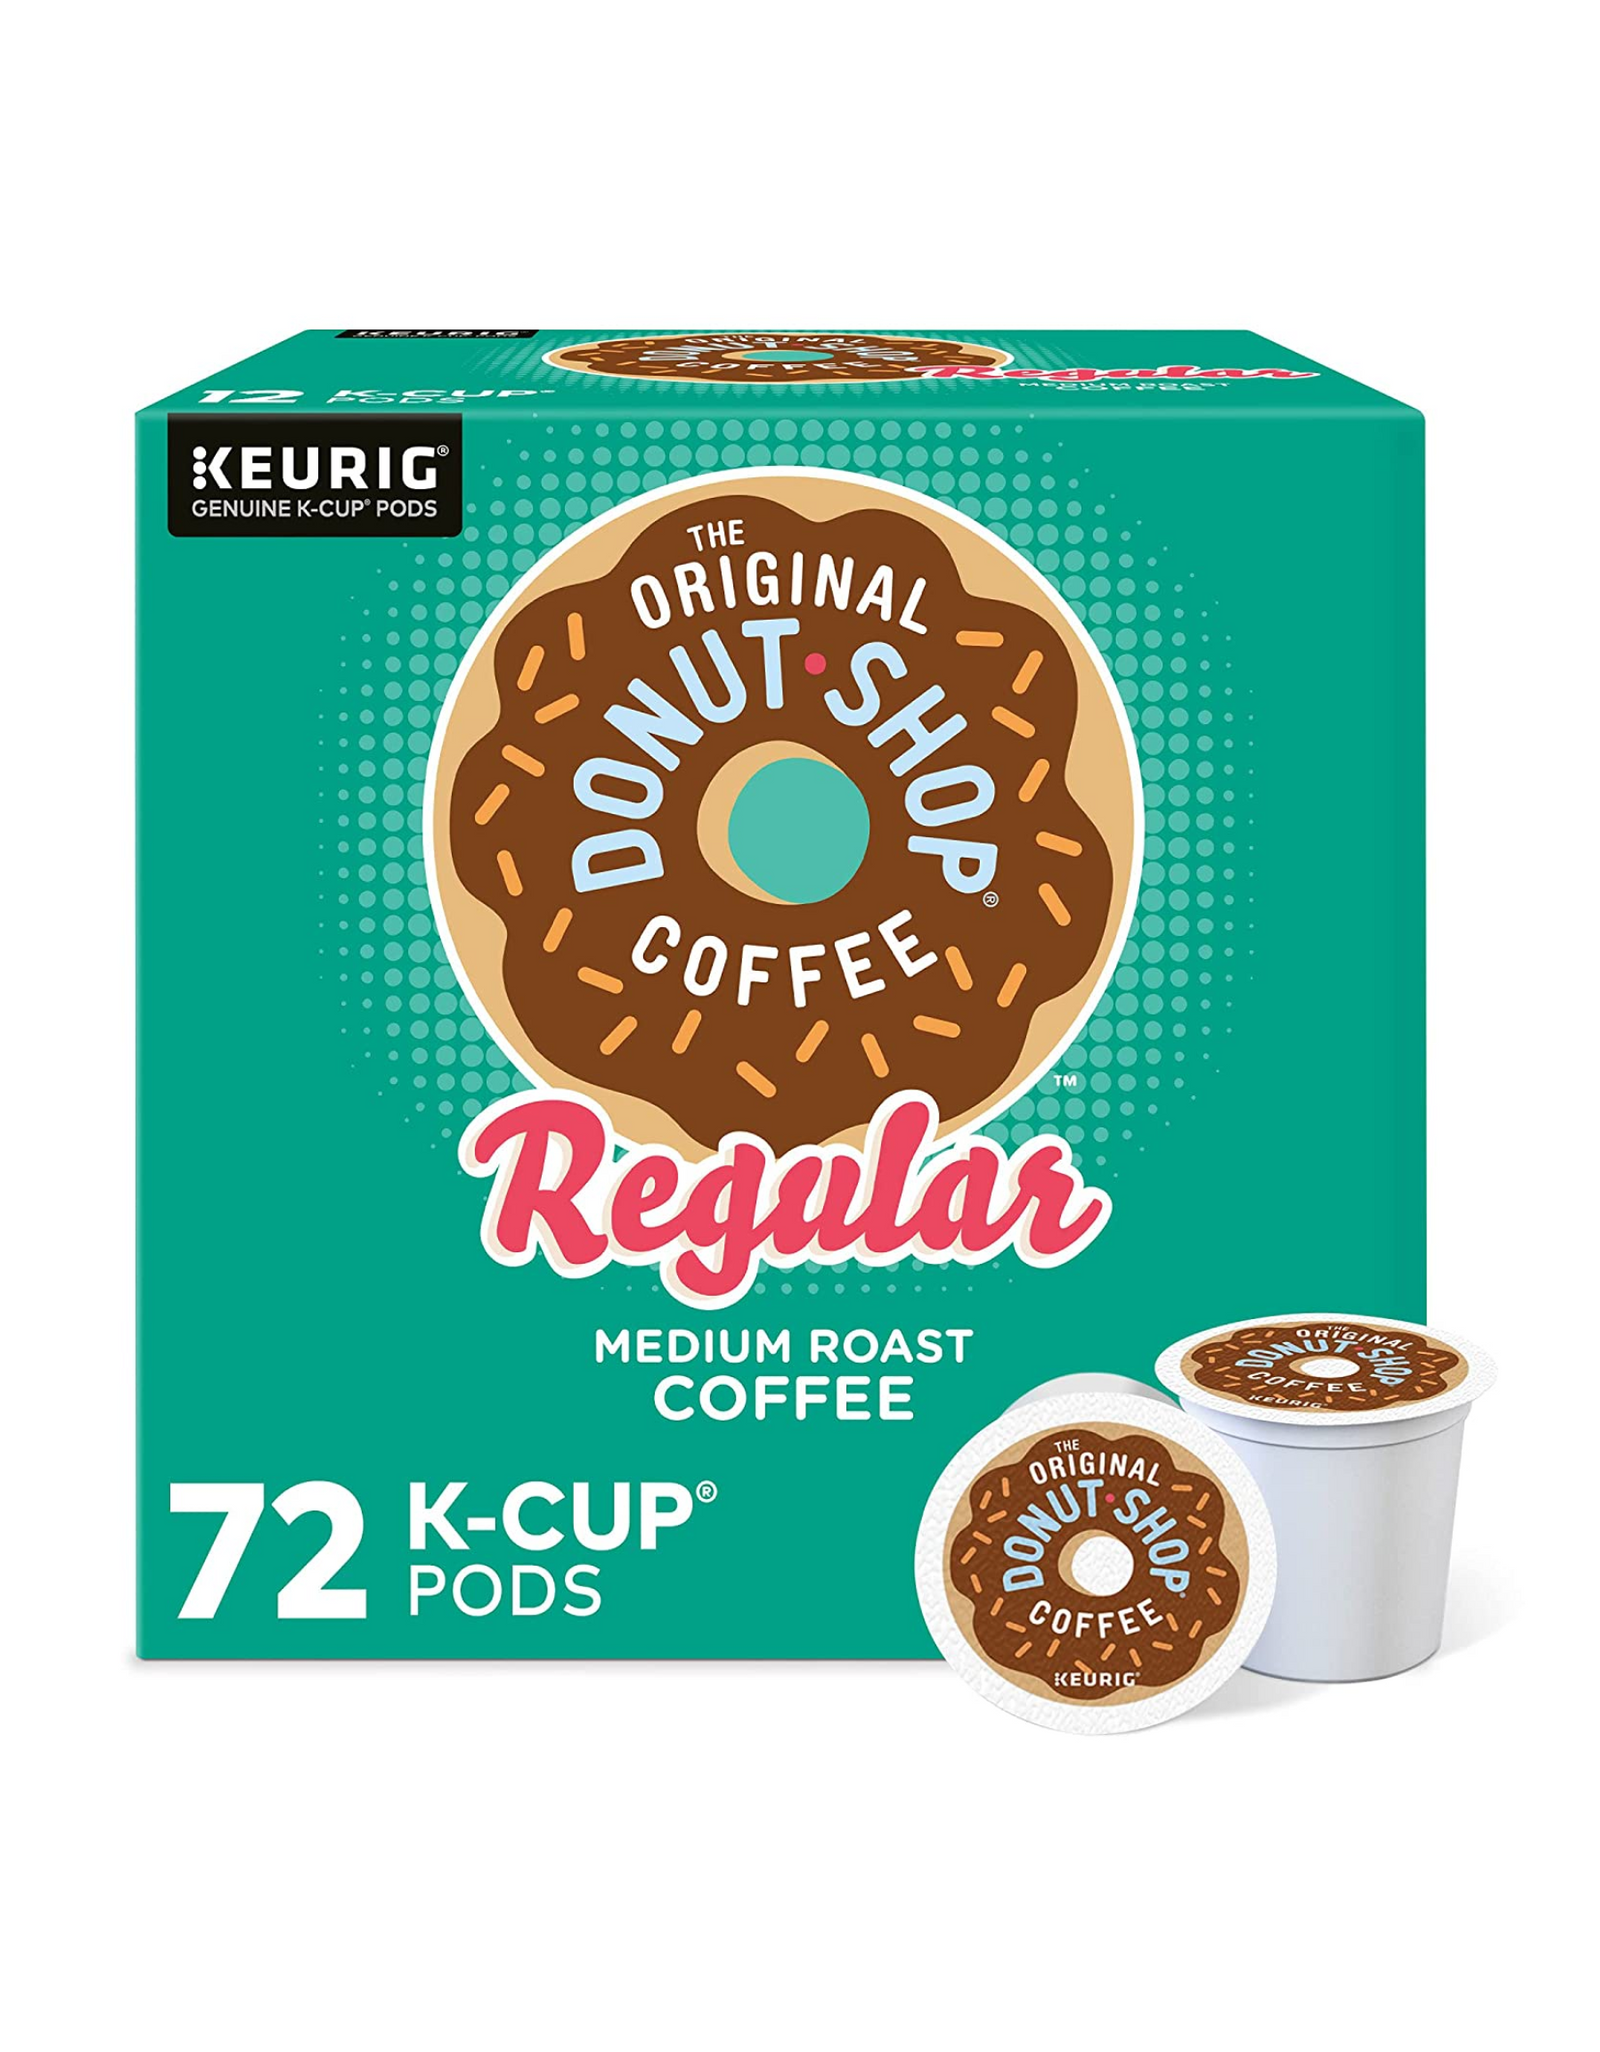 The Original Donut Shop Keurig Single-Serve K-Cup Pods, Regular Medium Roast Coffee, 72 Pods